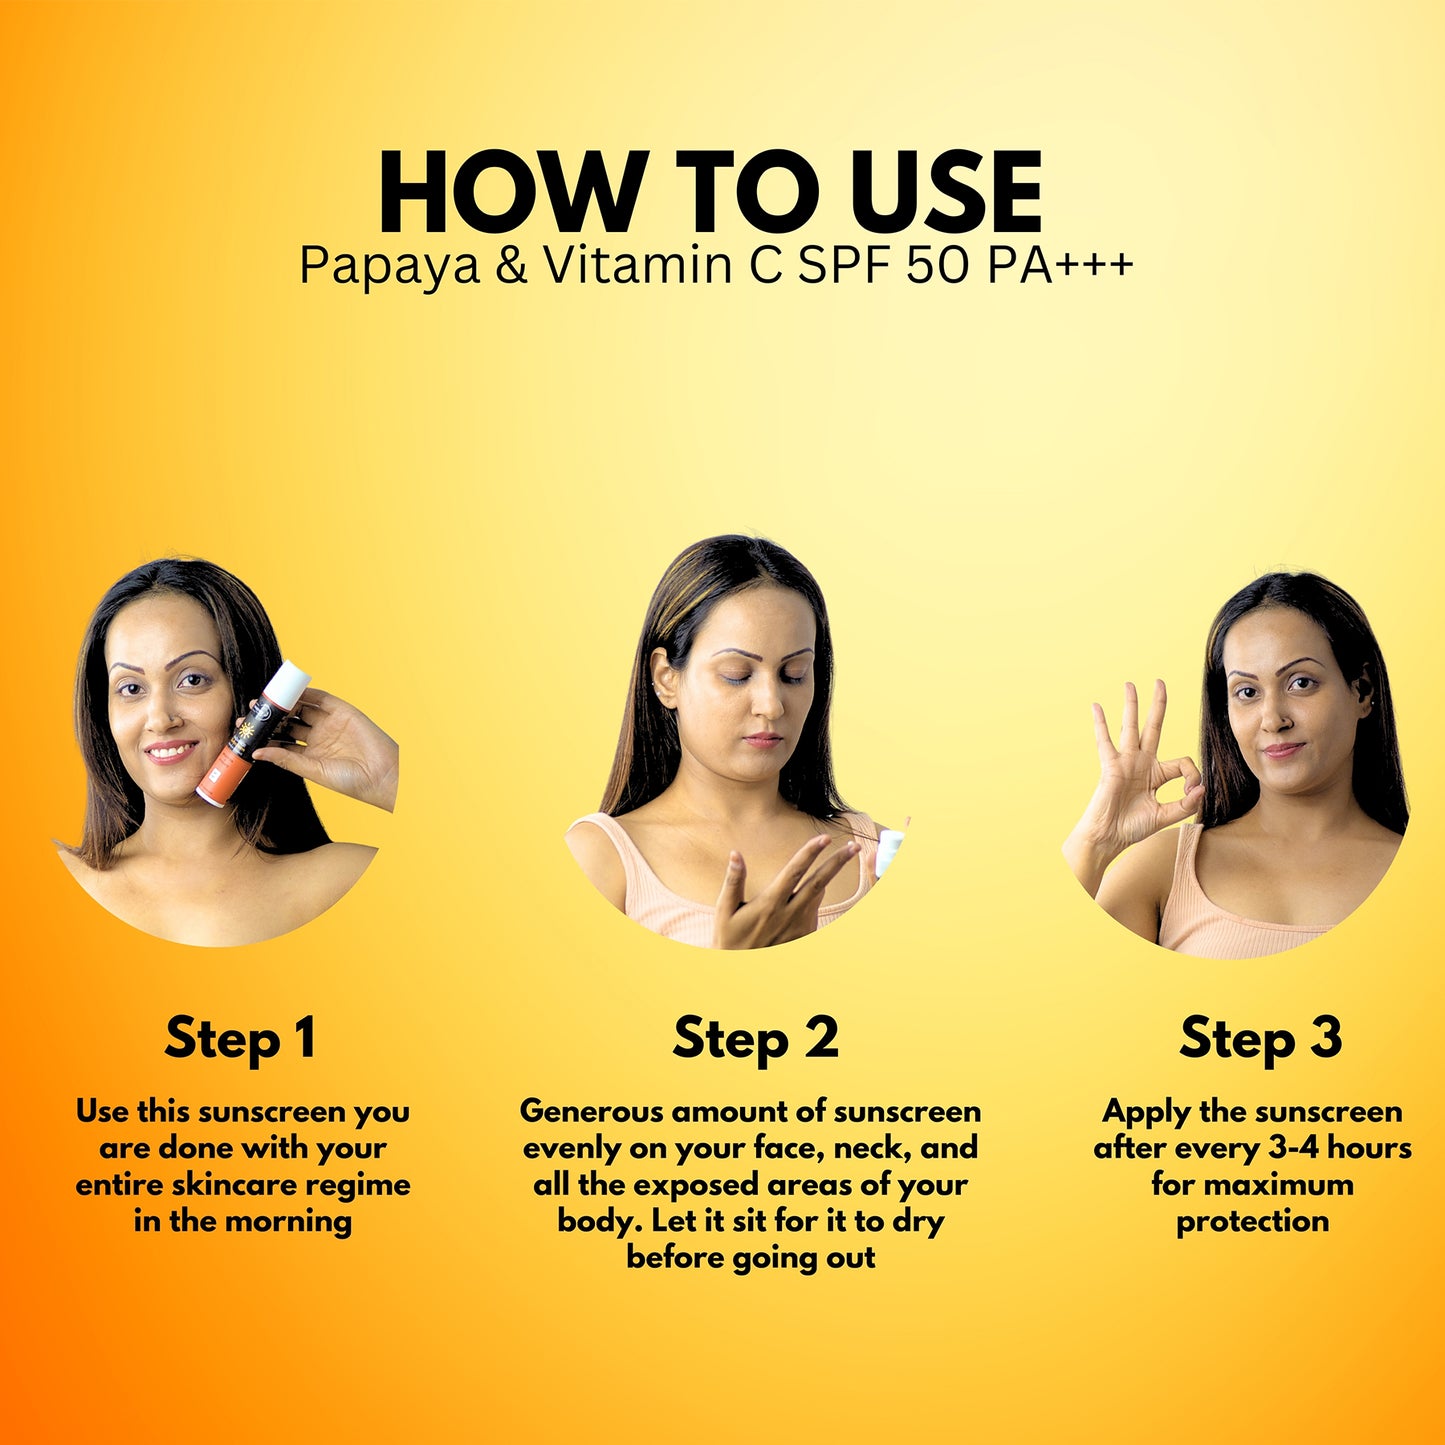 Vandyke Radiance Sunscreen With Papaya & Vitamin C SPF 50 PA+++, 50gm